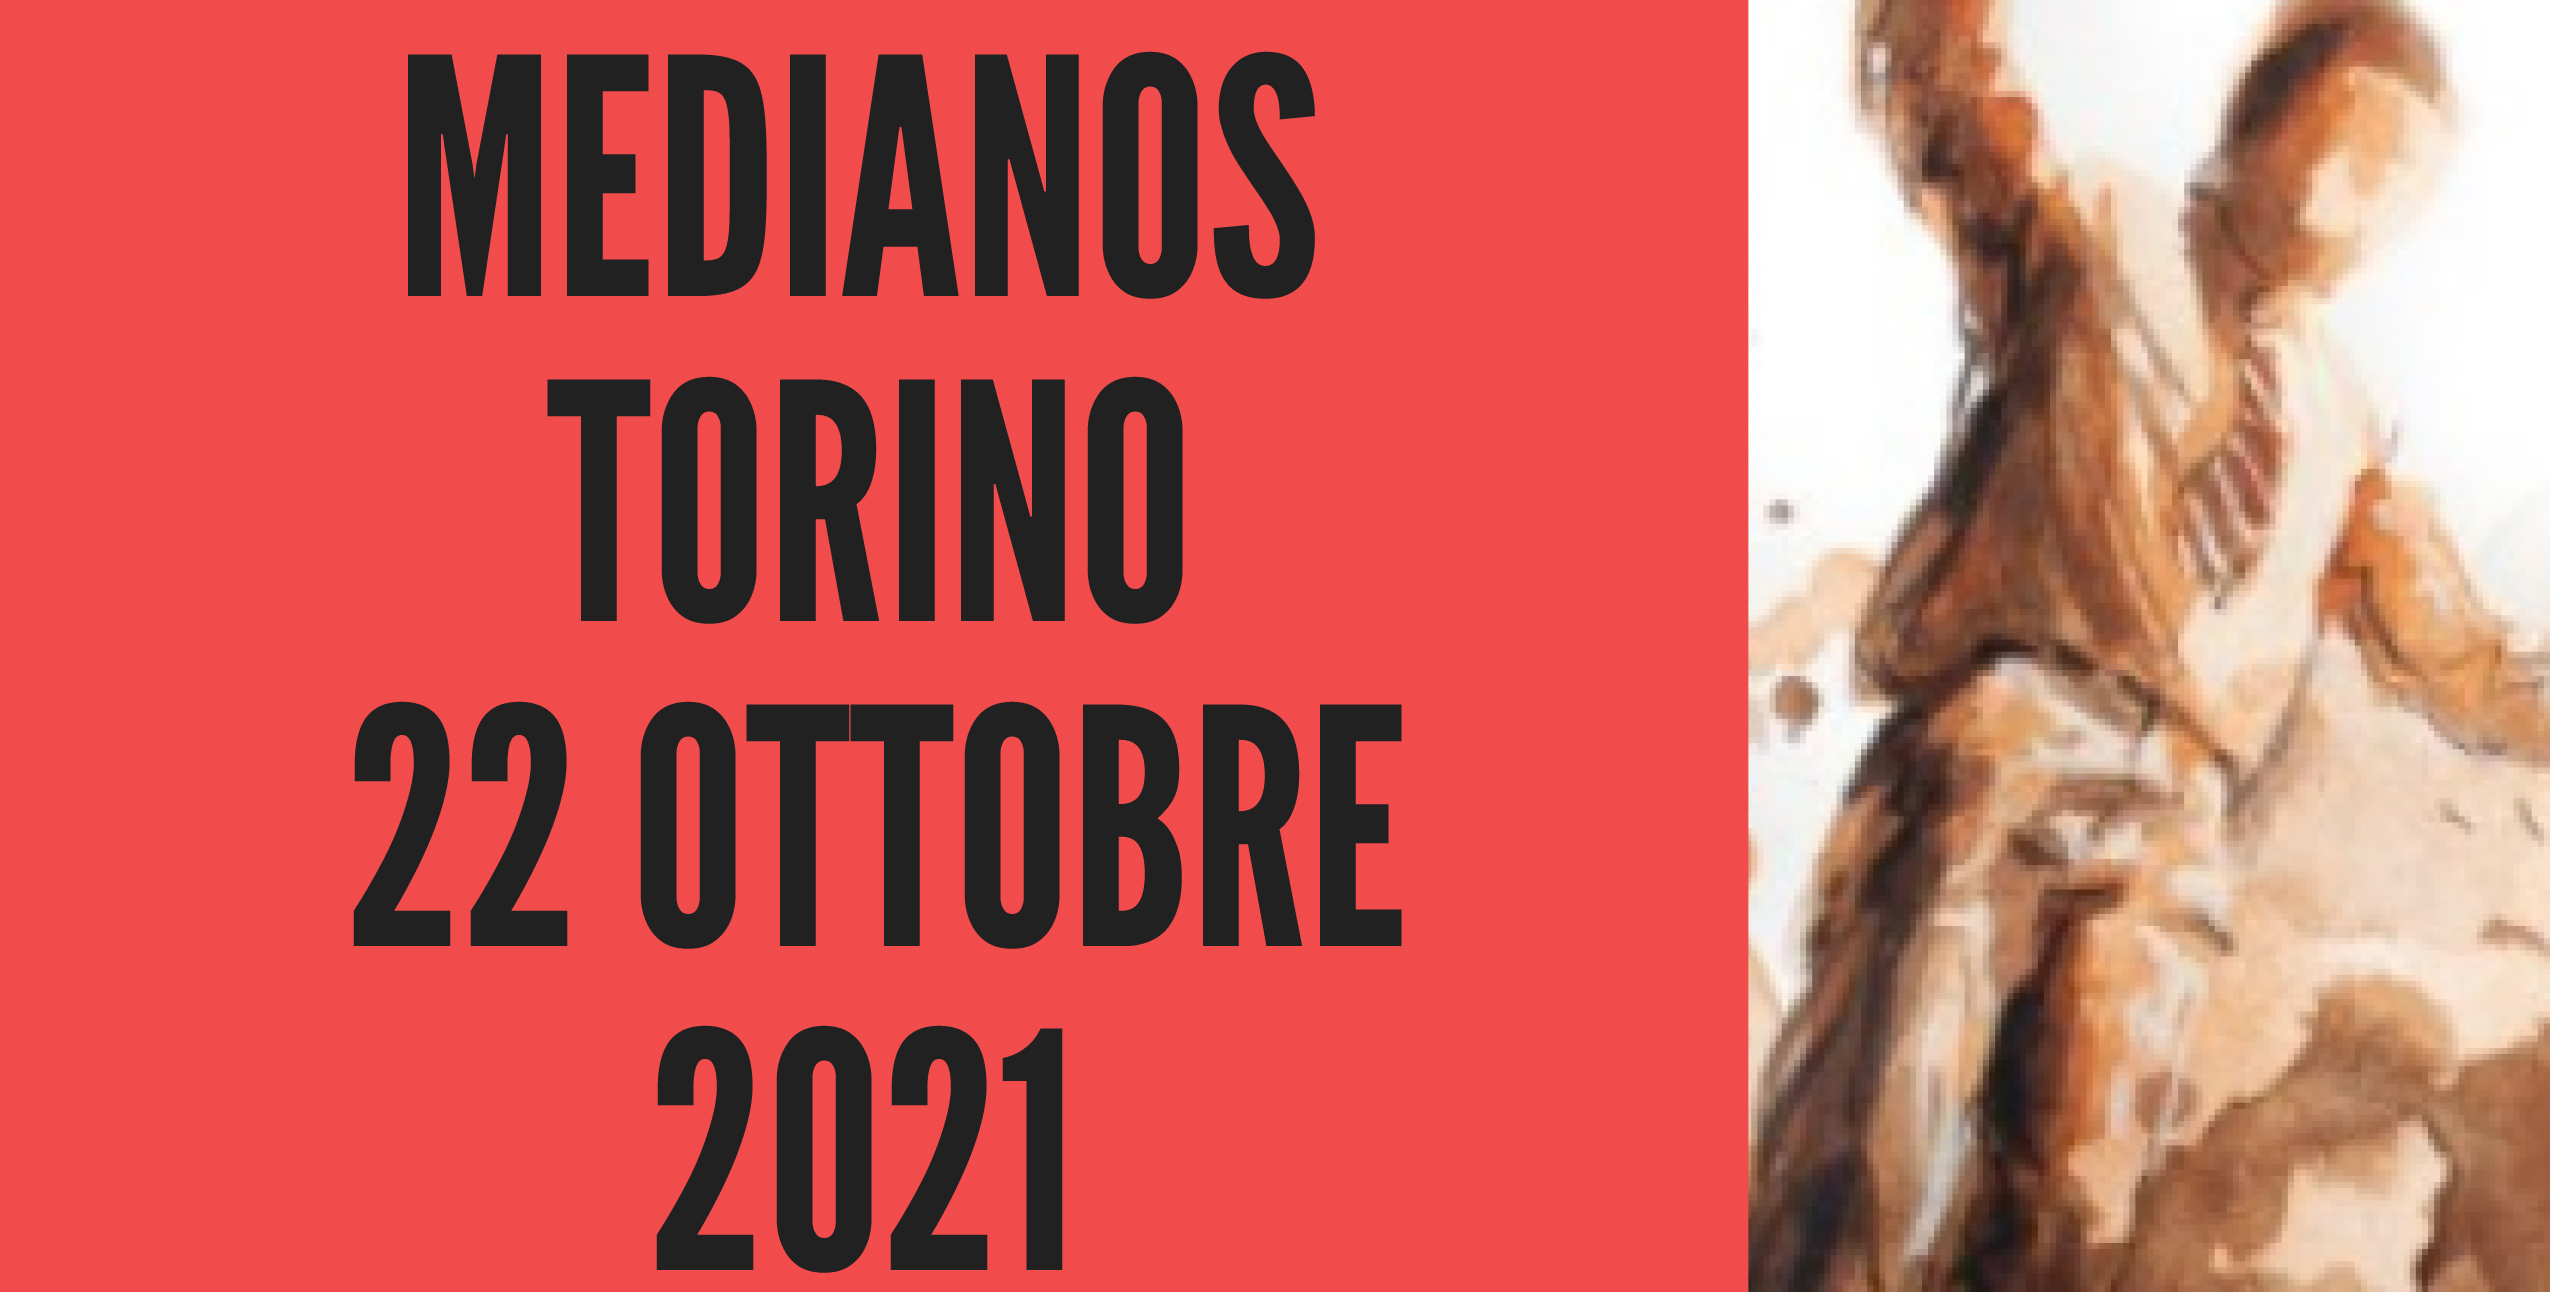 Medianos - Torino - 22 ottobre 2021 - Claudio Messina